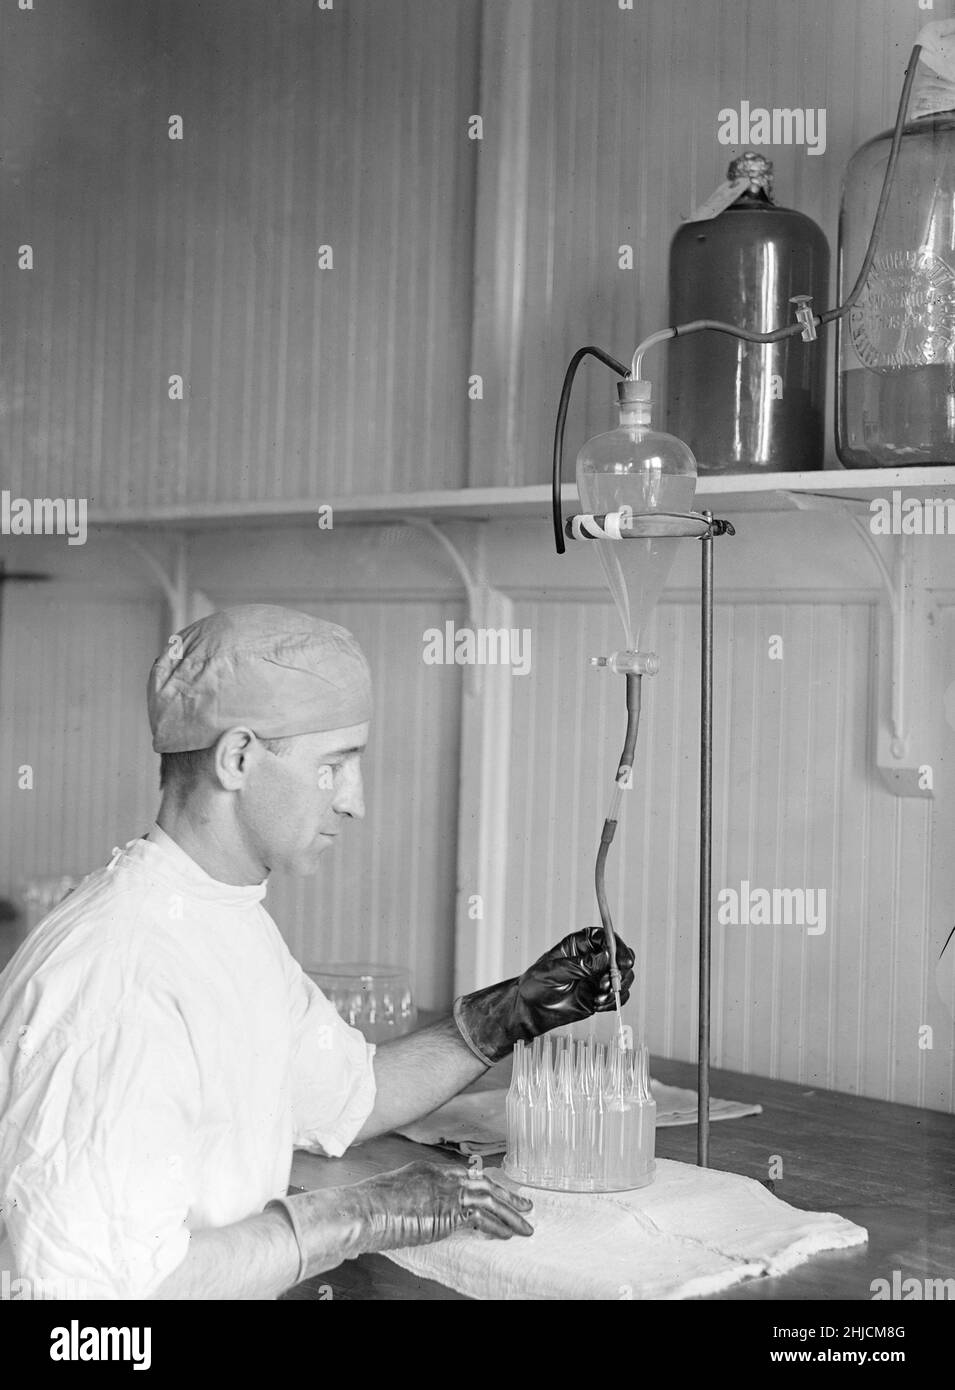 Making typhoid vaccine at U.S. Army medical school. Harris & Ewing, 1917. Stock Photo